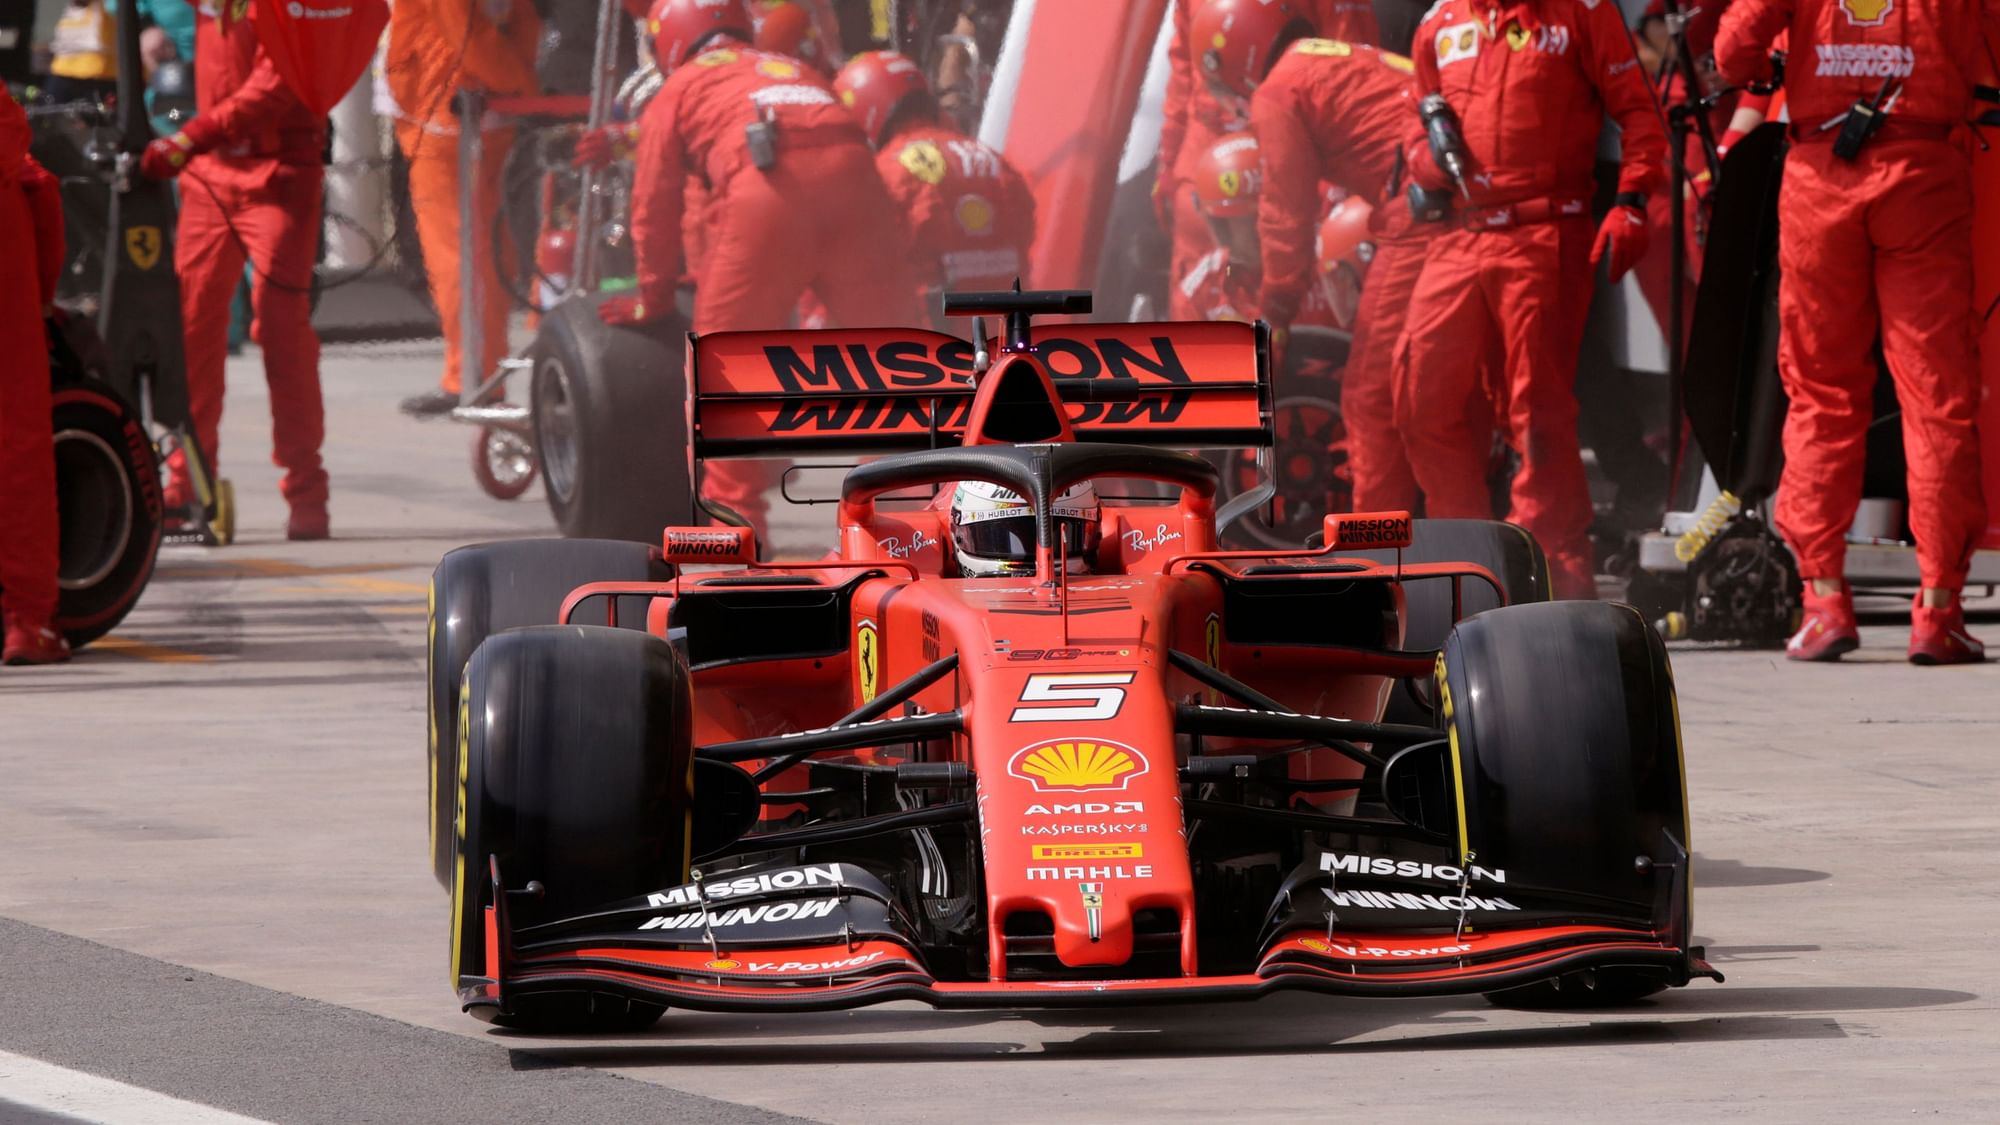 Ferrari driver Sebastian Vettel, of Germany, leaves the pits during the Brazilian Formula One Grand Prix at the Interlagos race track in Sao Paulo, Brazil.